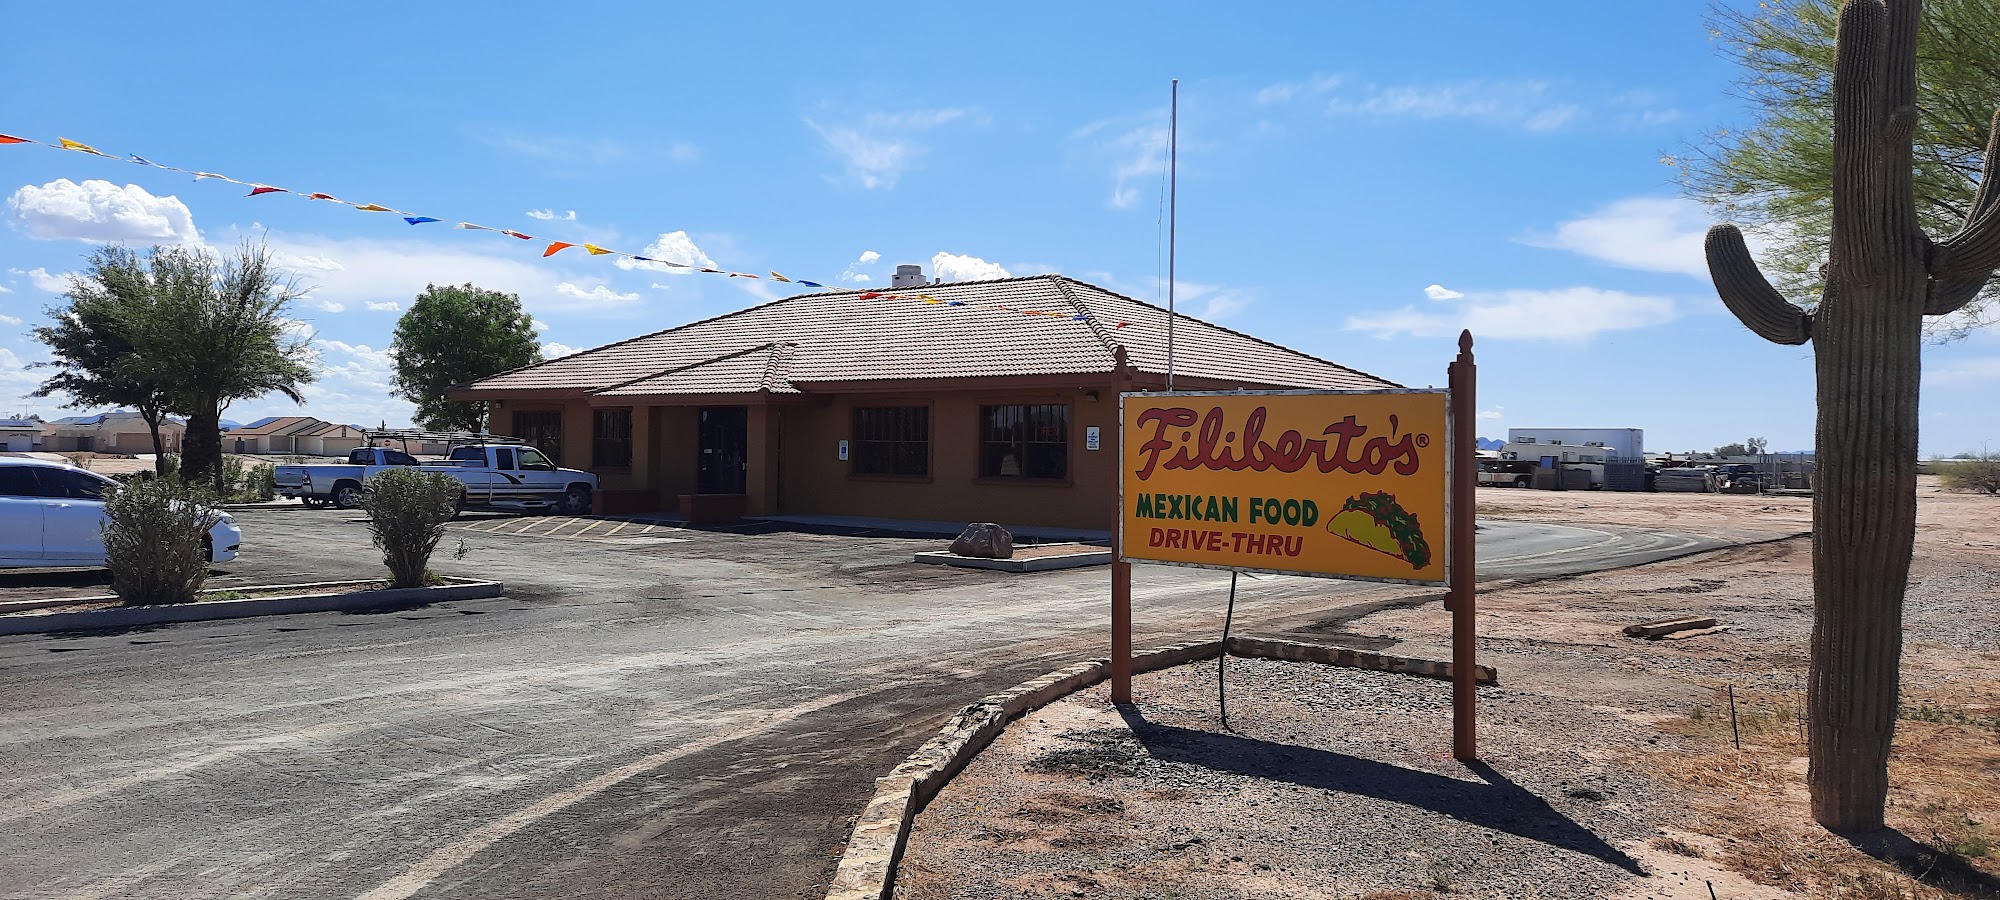 Filiberto's